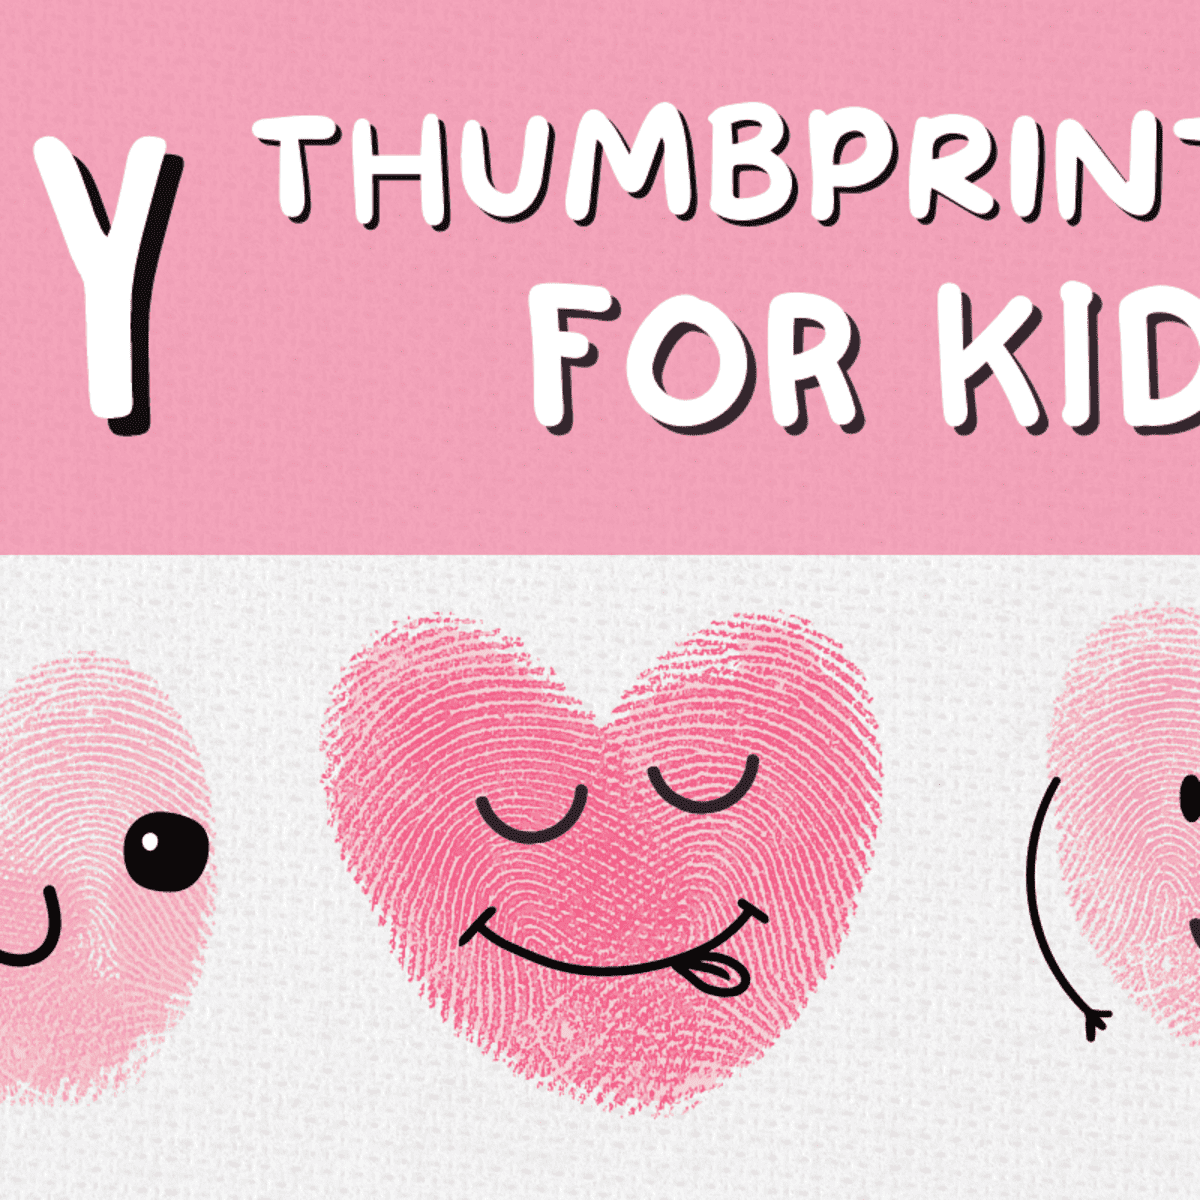 Mess Monsters: Thumbprint Art + DIY Stamp Pads 